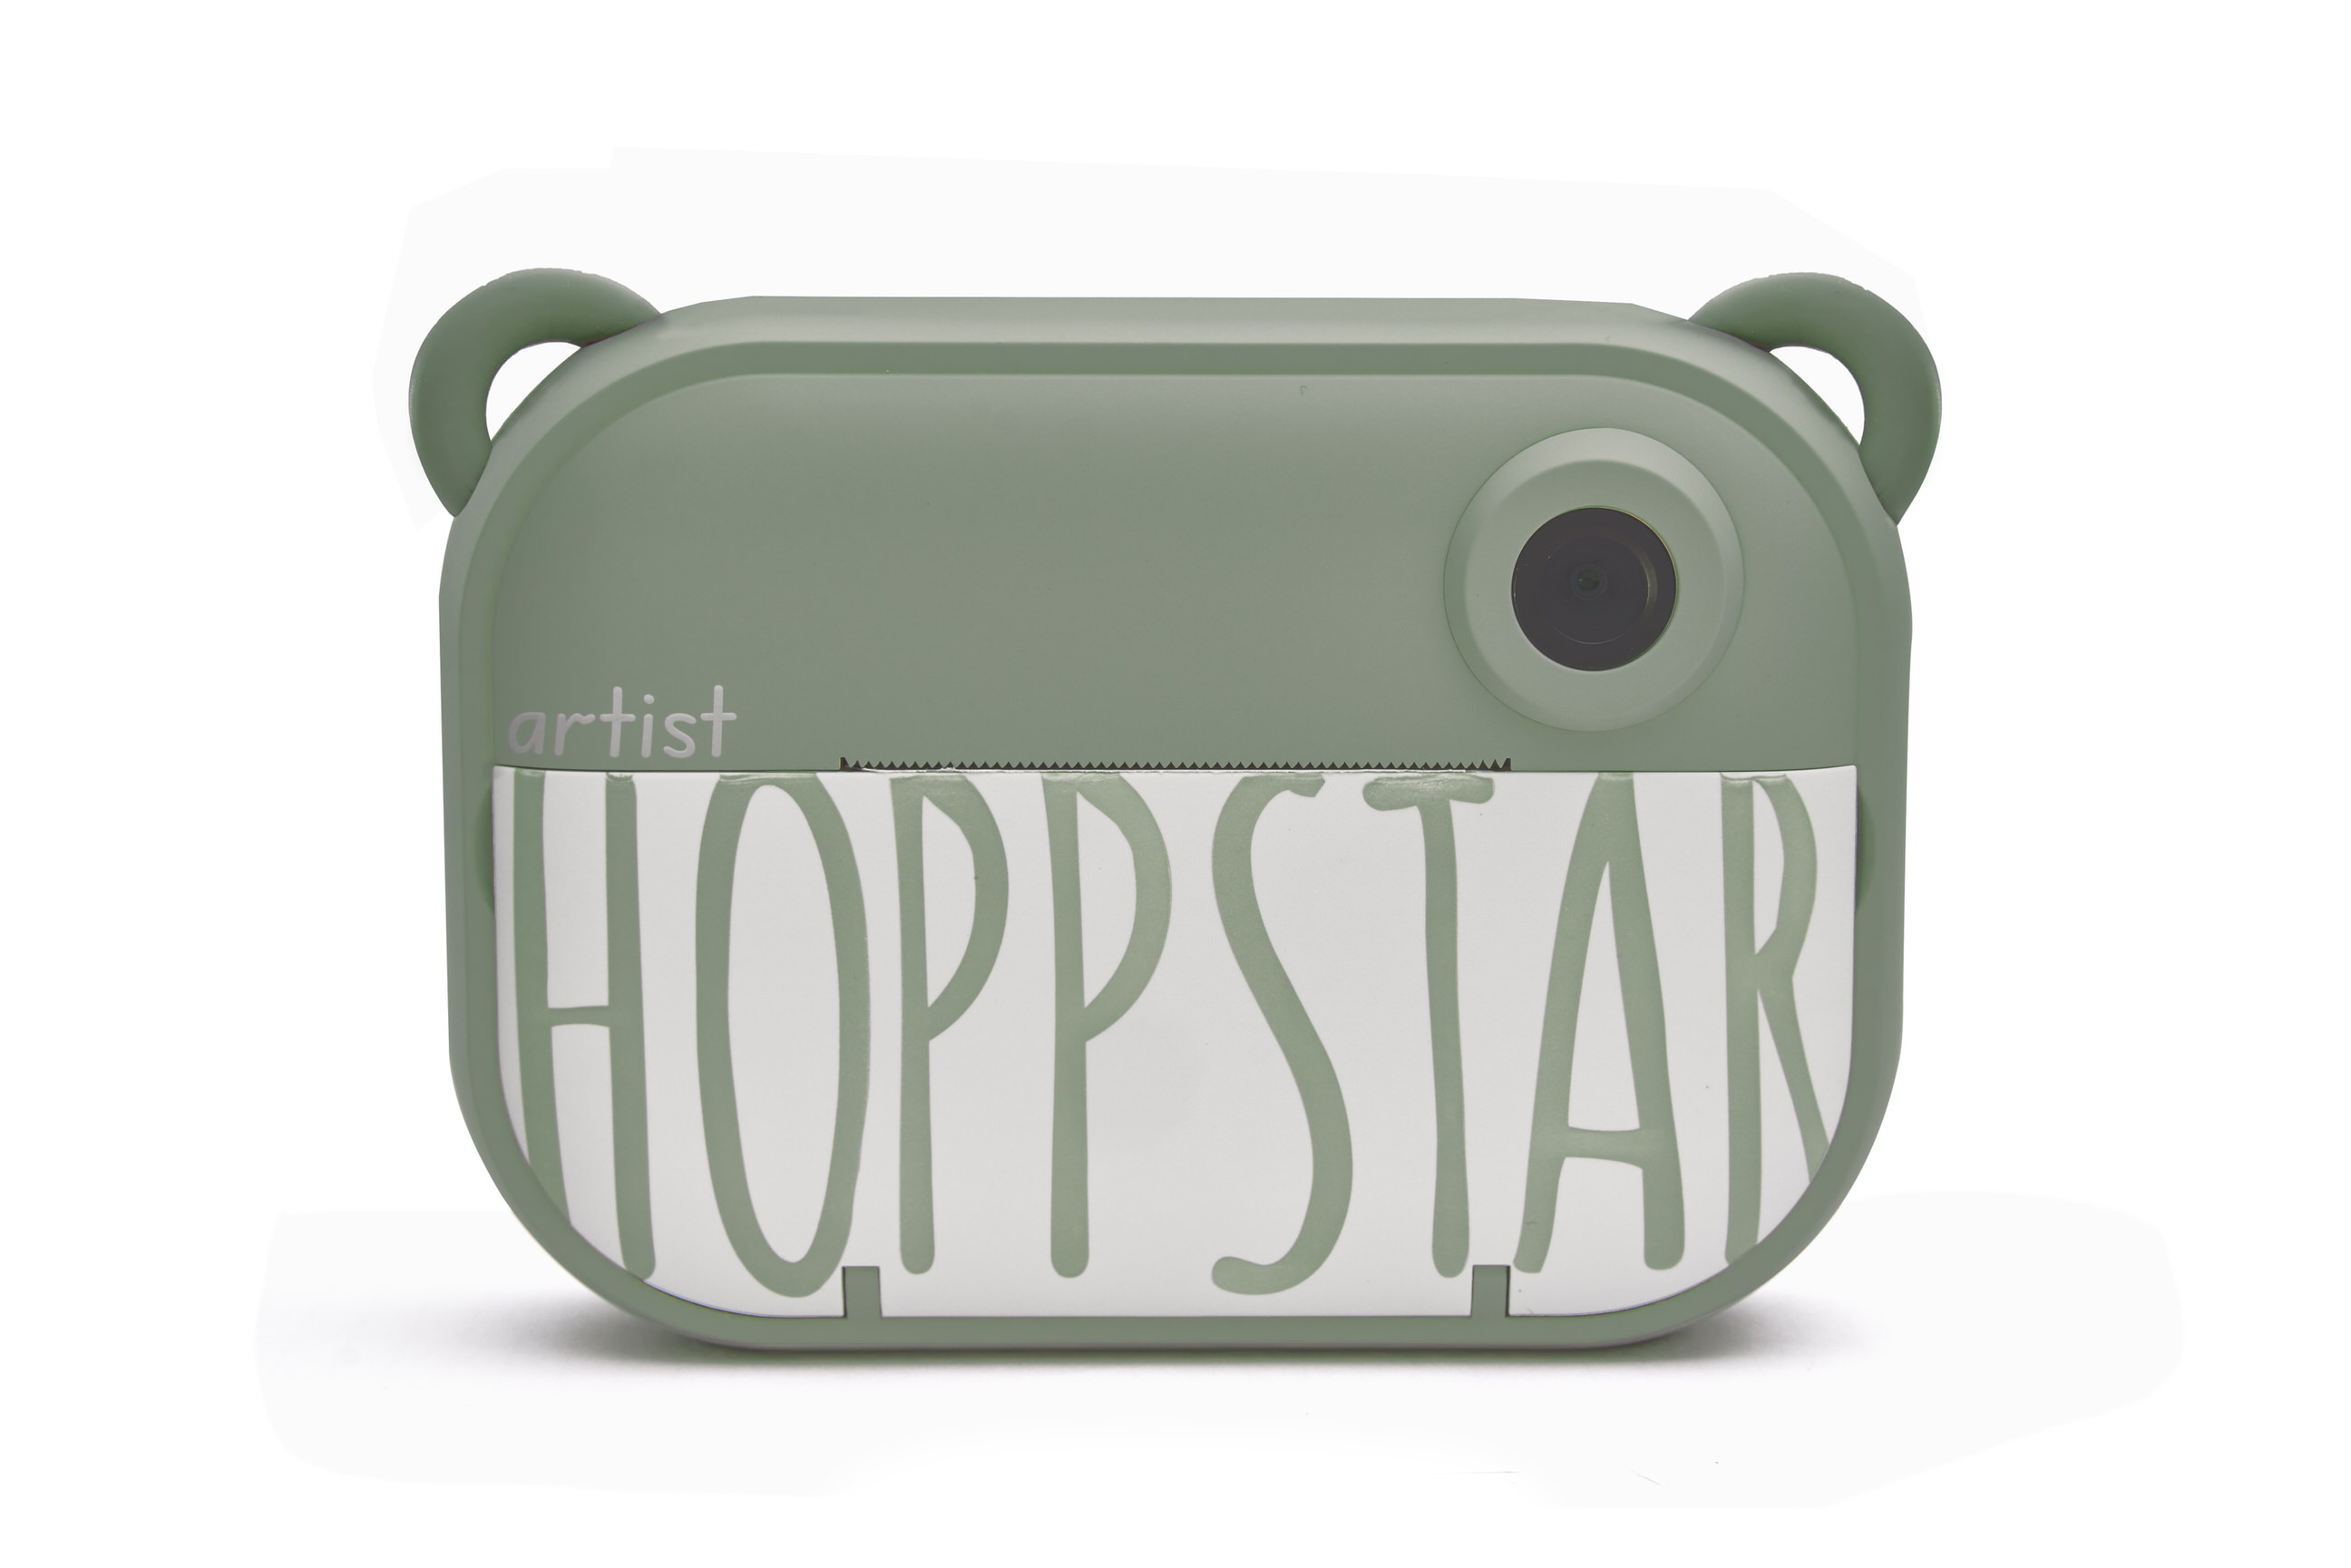 Hoppstar Artist Sofortbildkamera in der Farbe Laurel (grün), Frontalansicht